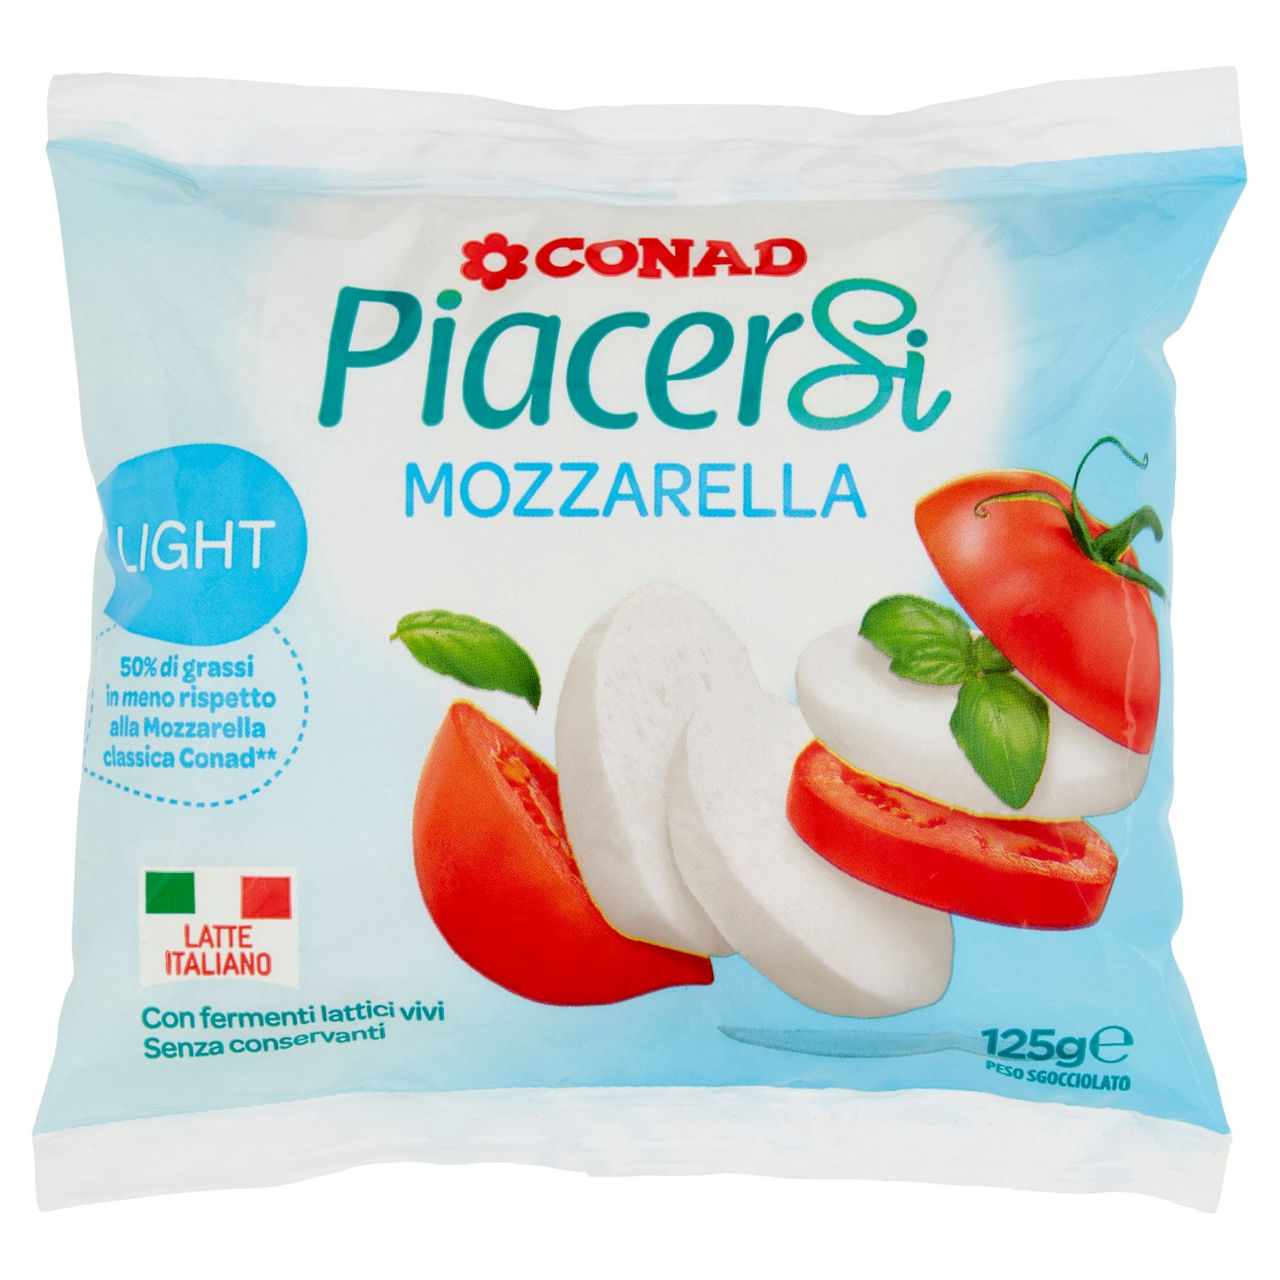 Mozzarella Light 125g Piacersi Conad online